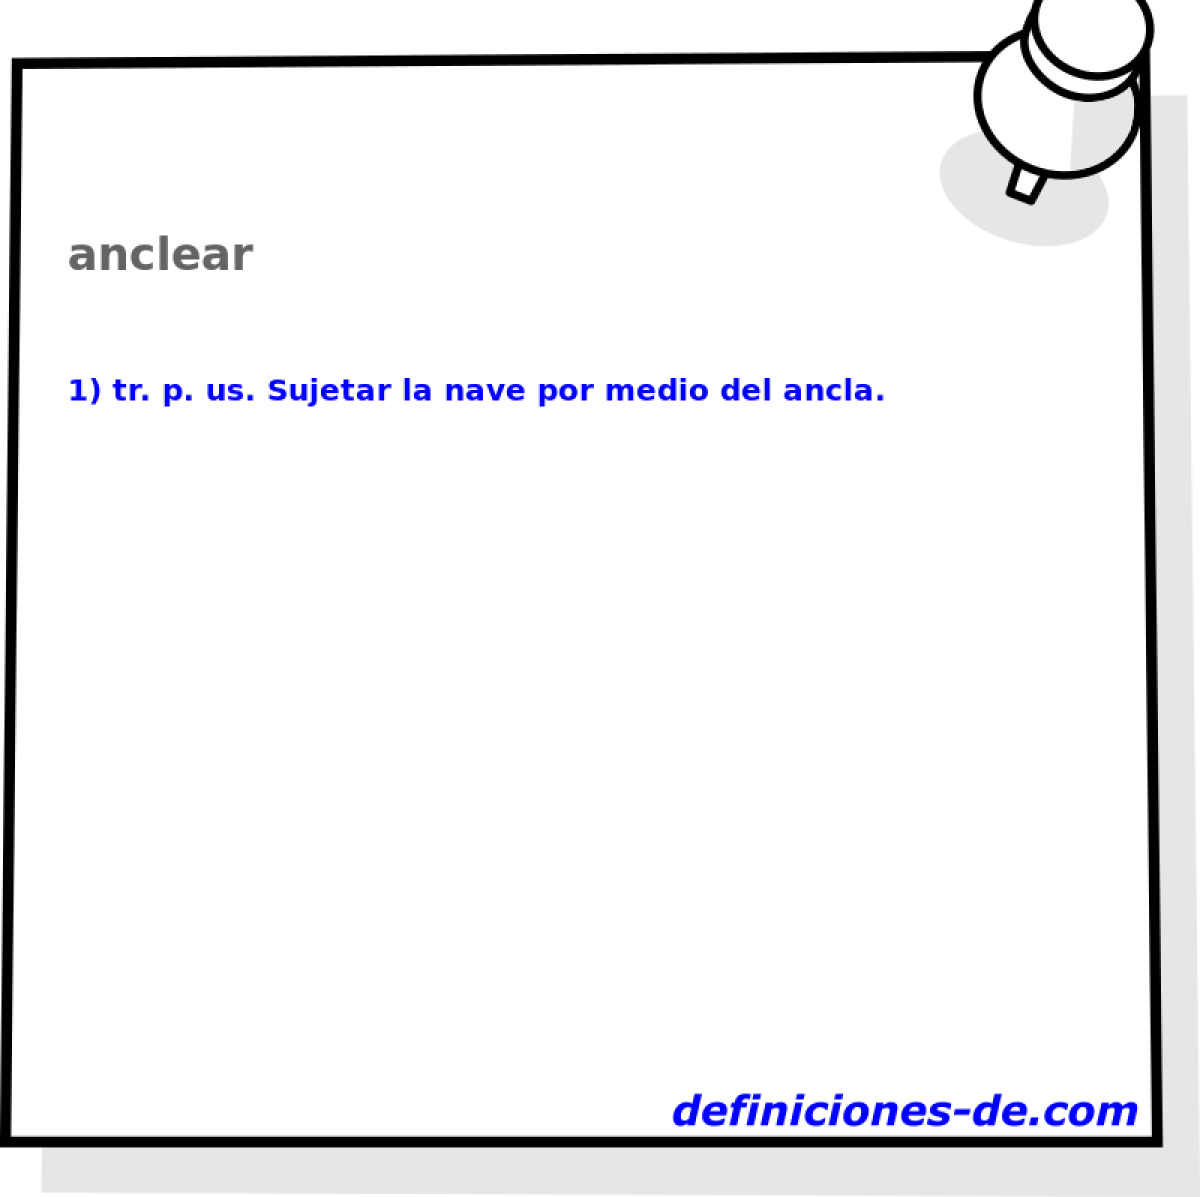 anclear 